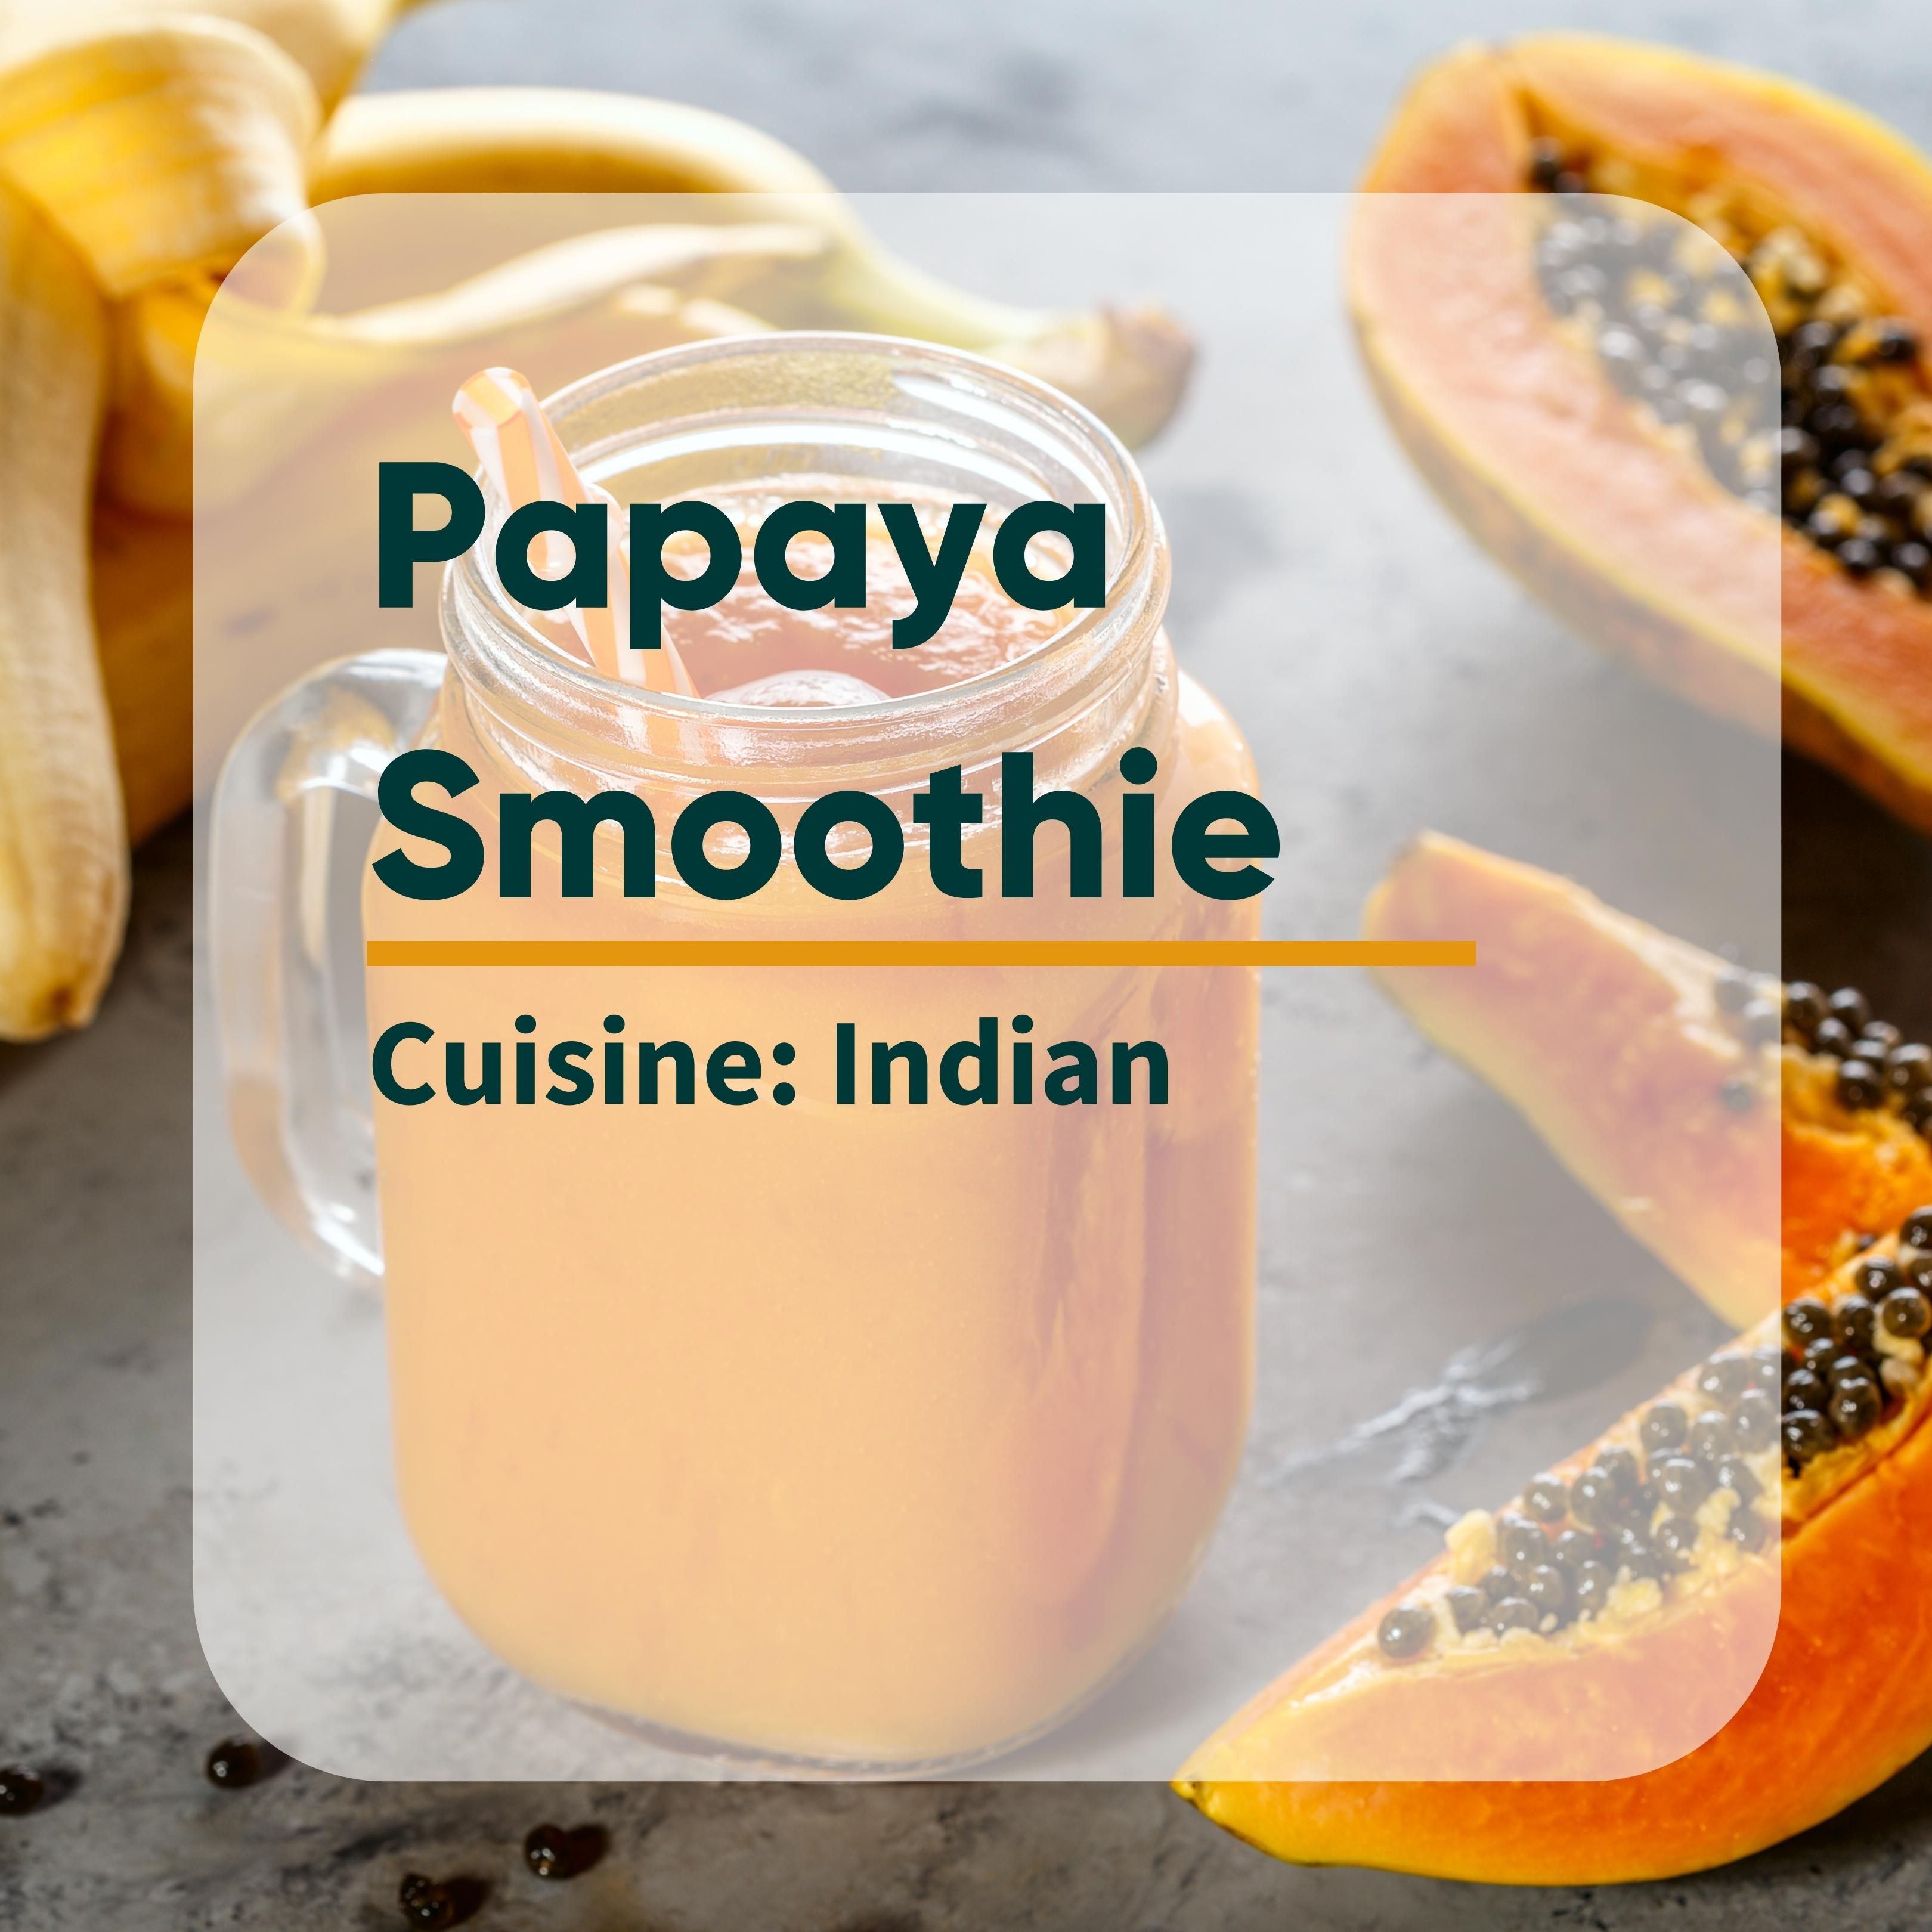 Papaya Smoothie Image